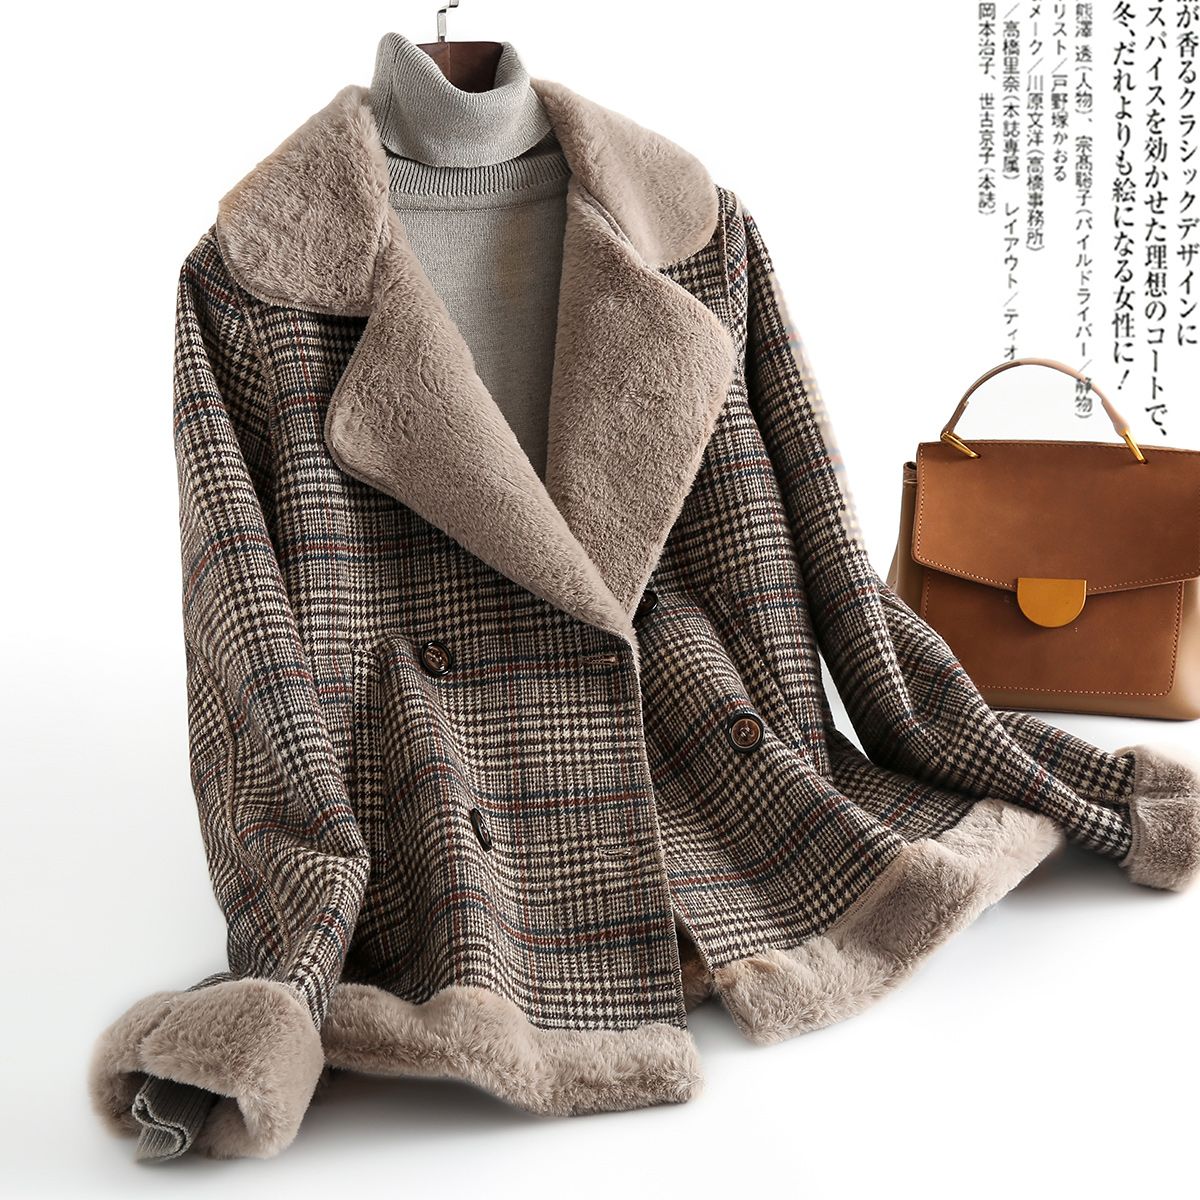 Women's autumn and winter new Plaid fur one-piece coat short Lamb Fur thickened jacket woolen coat